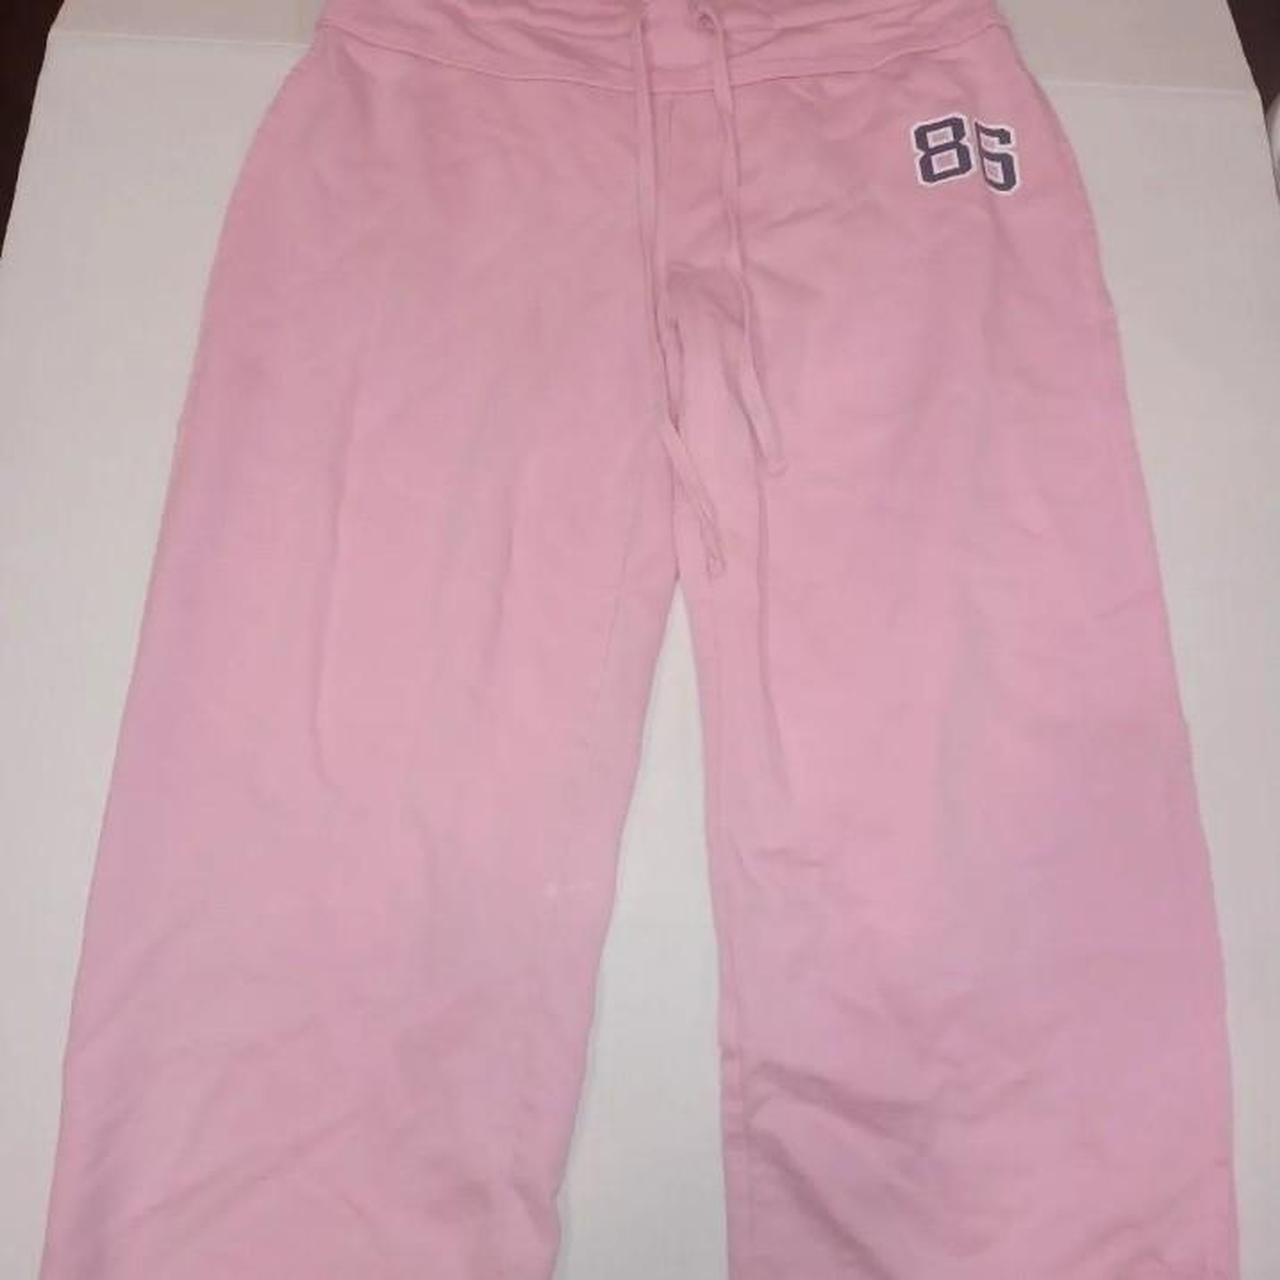 Victoria's Secret Love Pink Capri sweatpants. Color - Depop